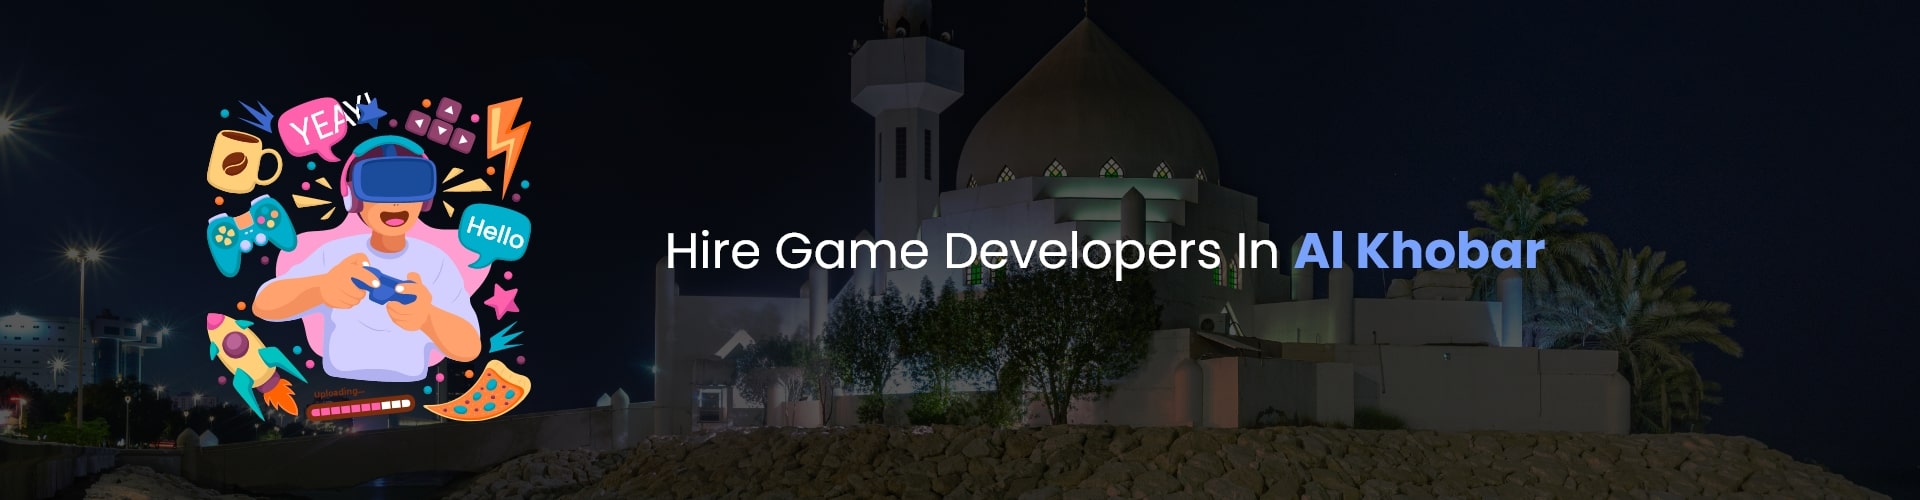 hire game developers in al khobar